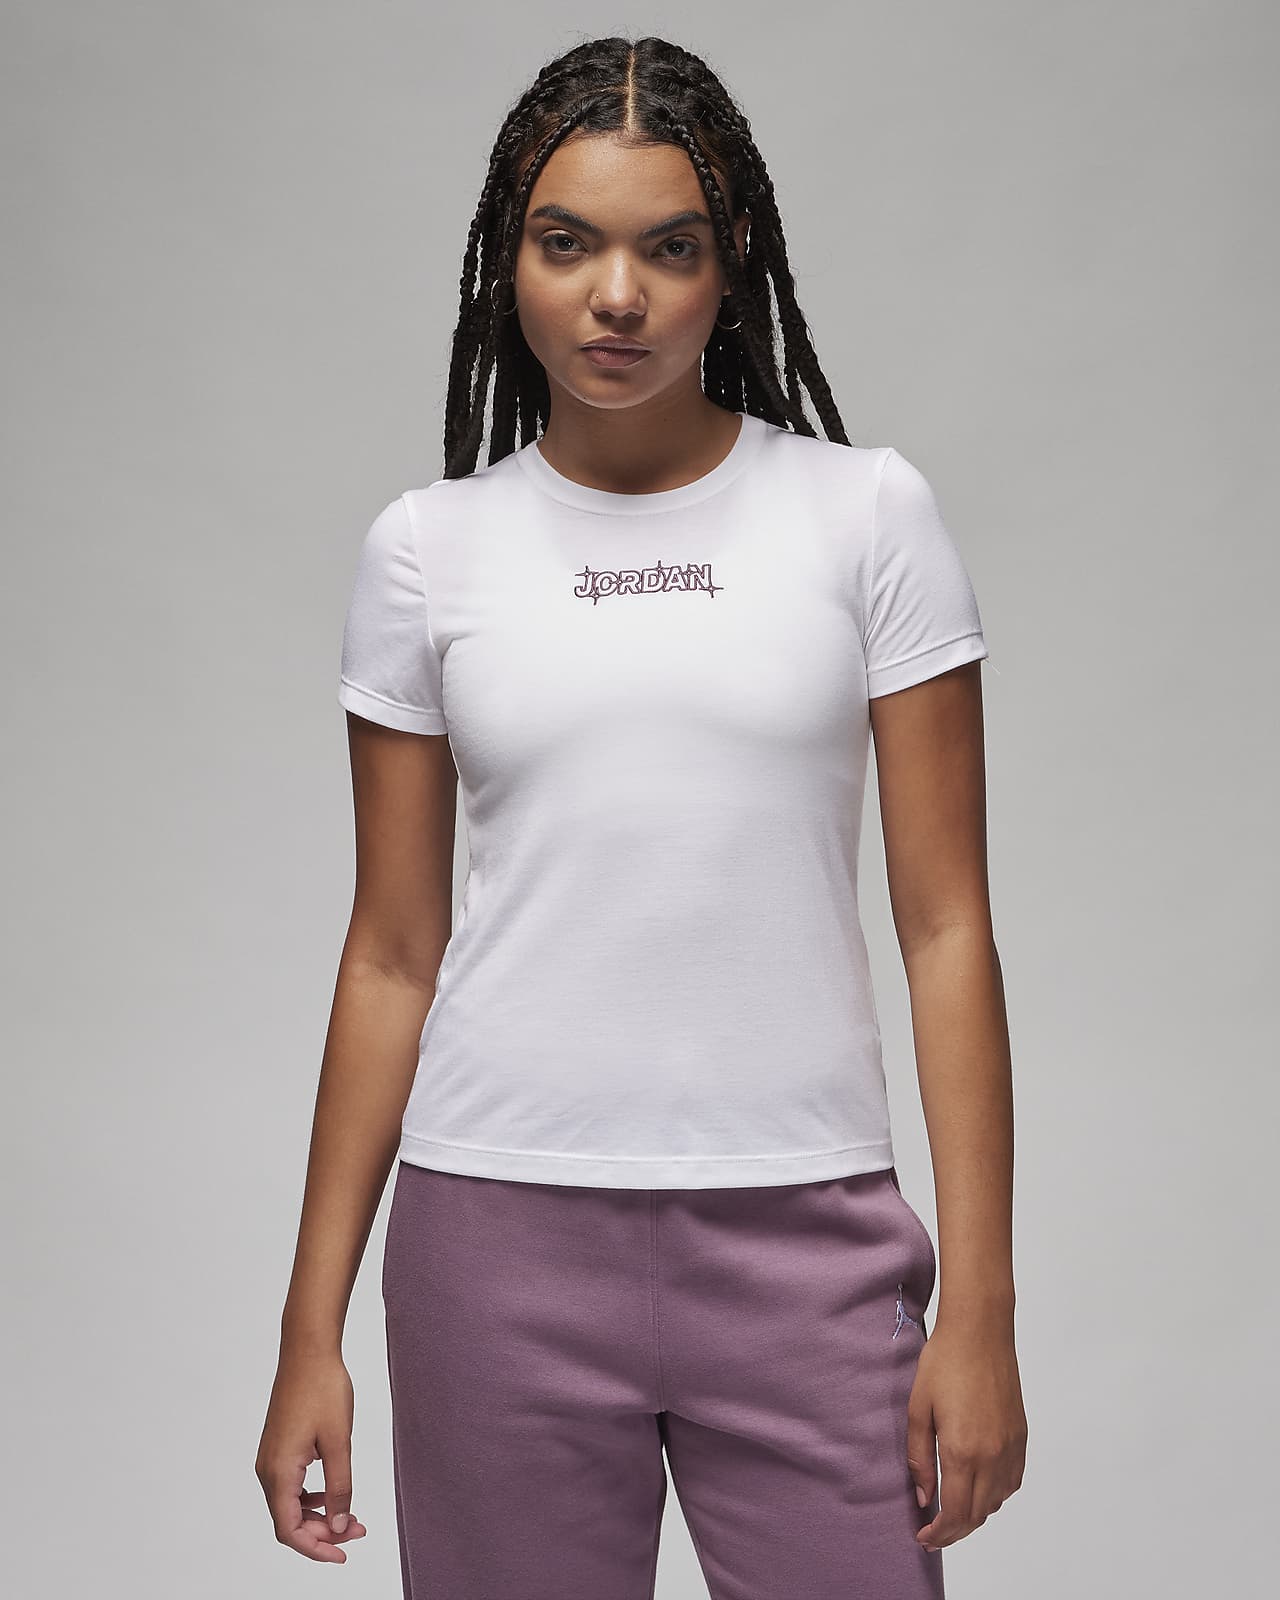 Jordan Women's Slim Graphic T-Shirt